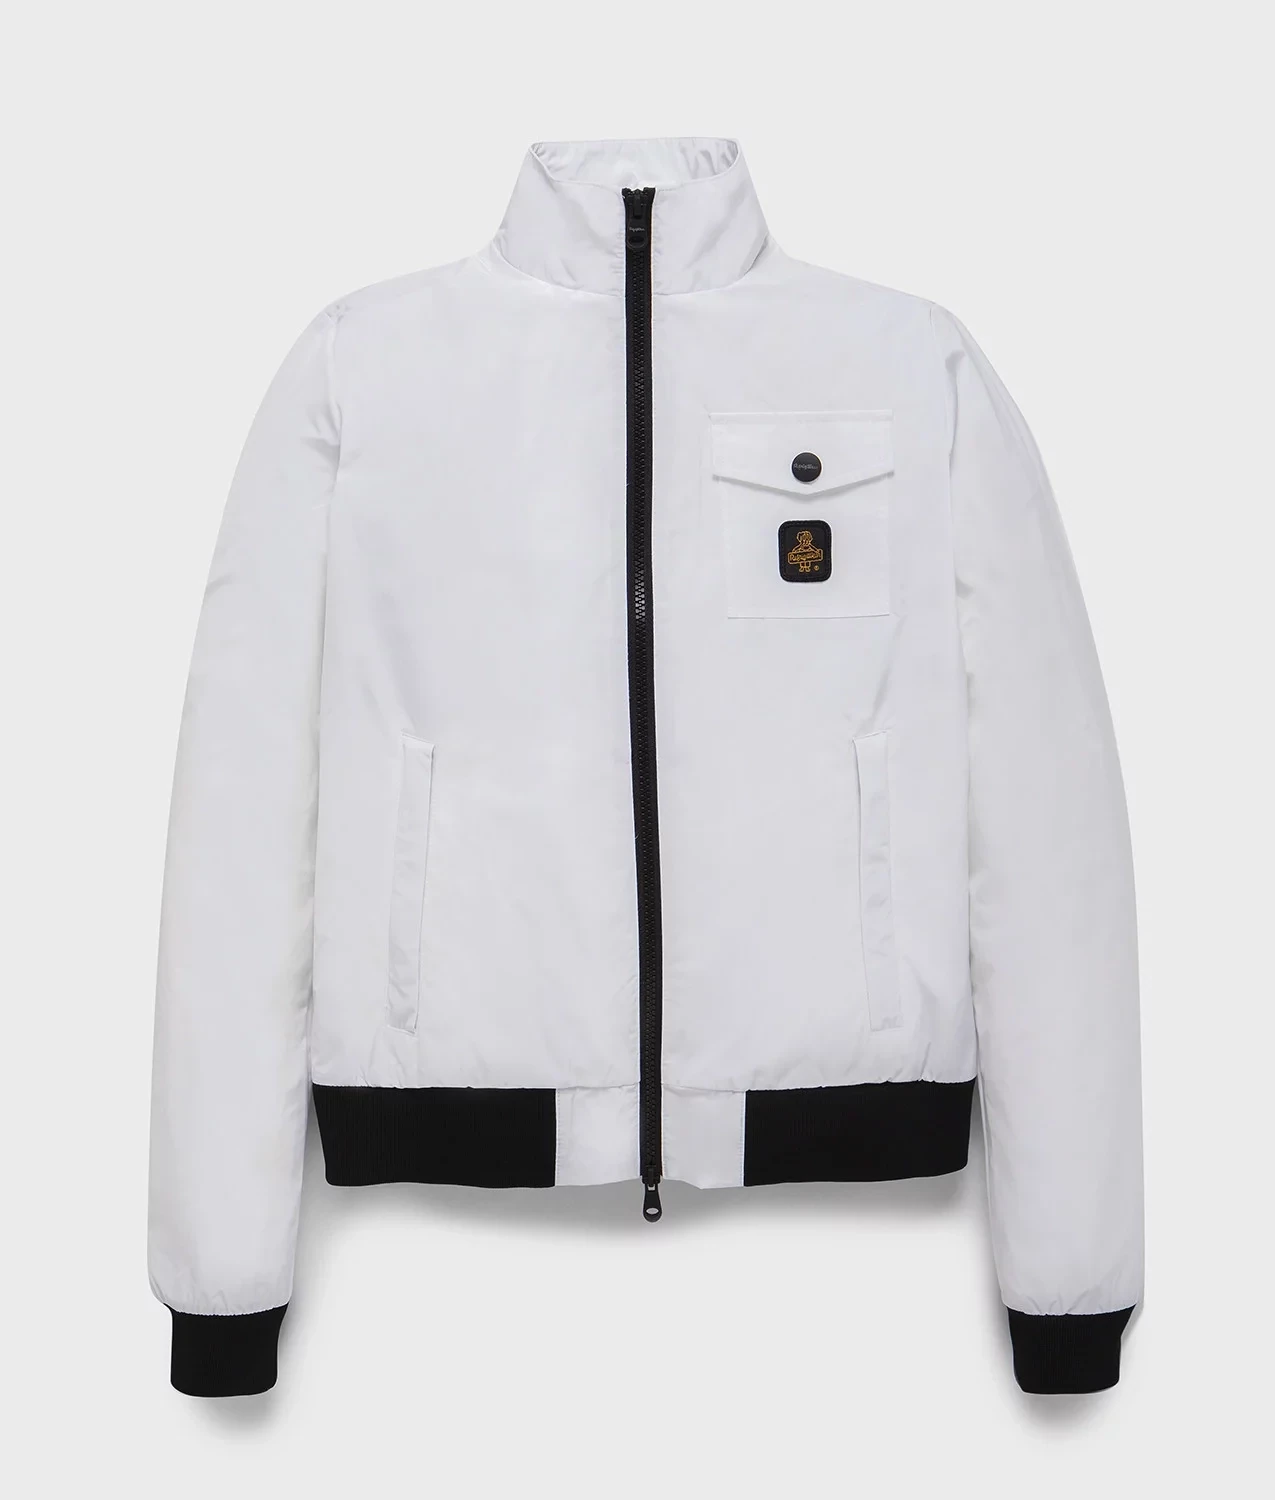 Giacca Refrigiwear art.W84600 NY0202 Lady Captain Jacket colore bianco